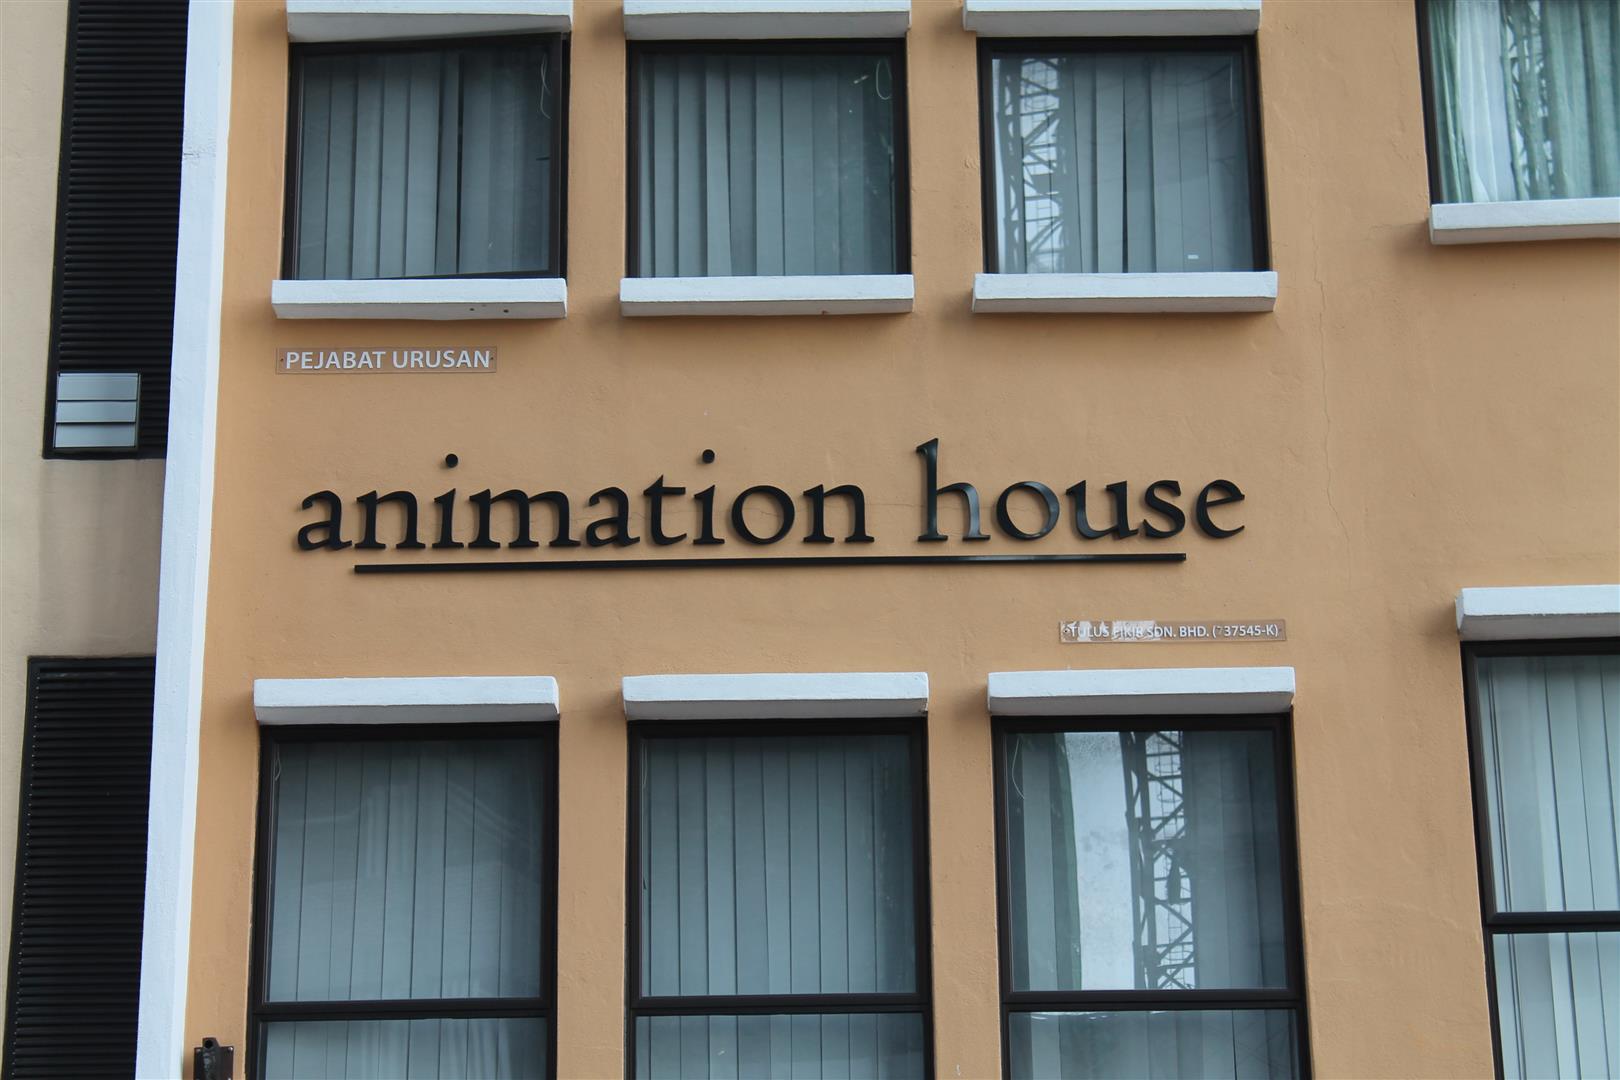 Tulus Fikir - Visit to Local Animation Company 25